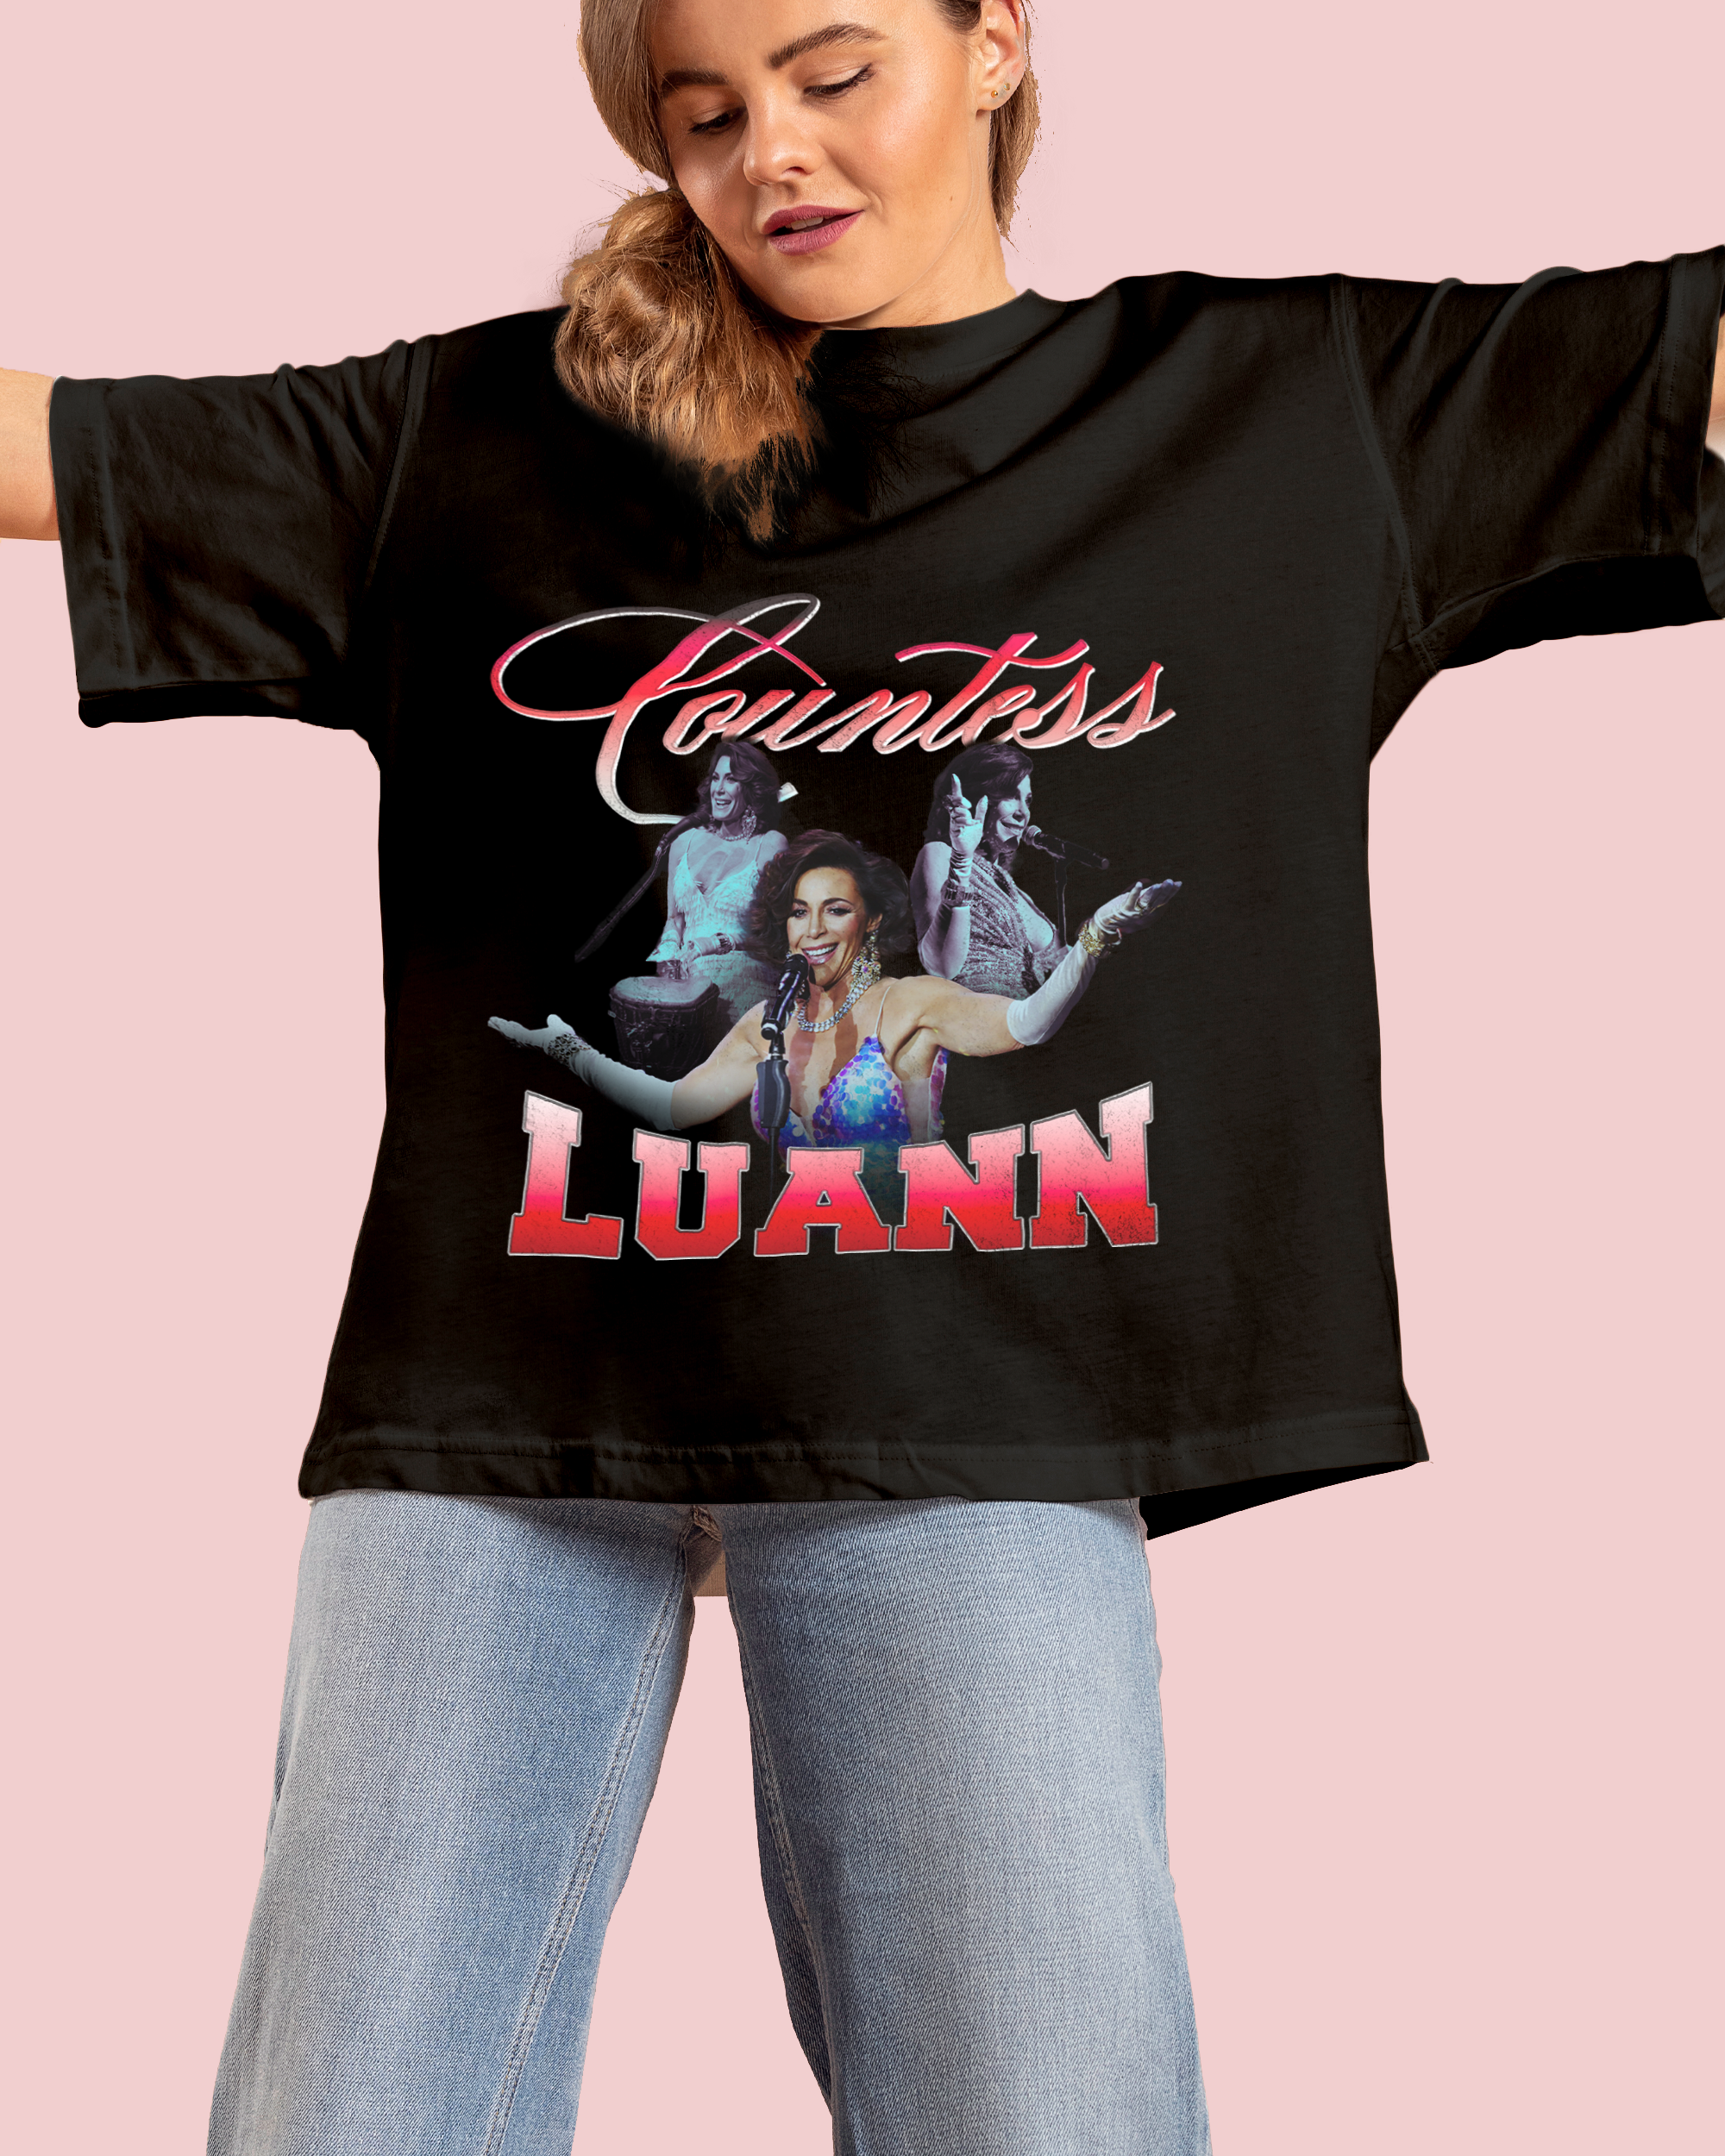 Countess Luann Concert Tee | Bravo TV Merch